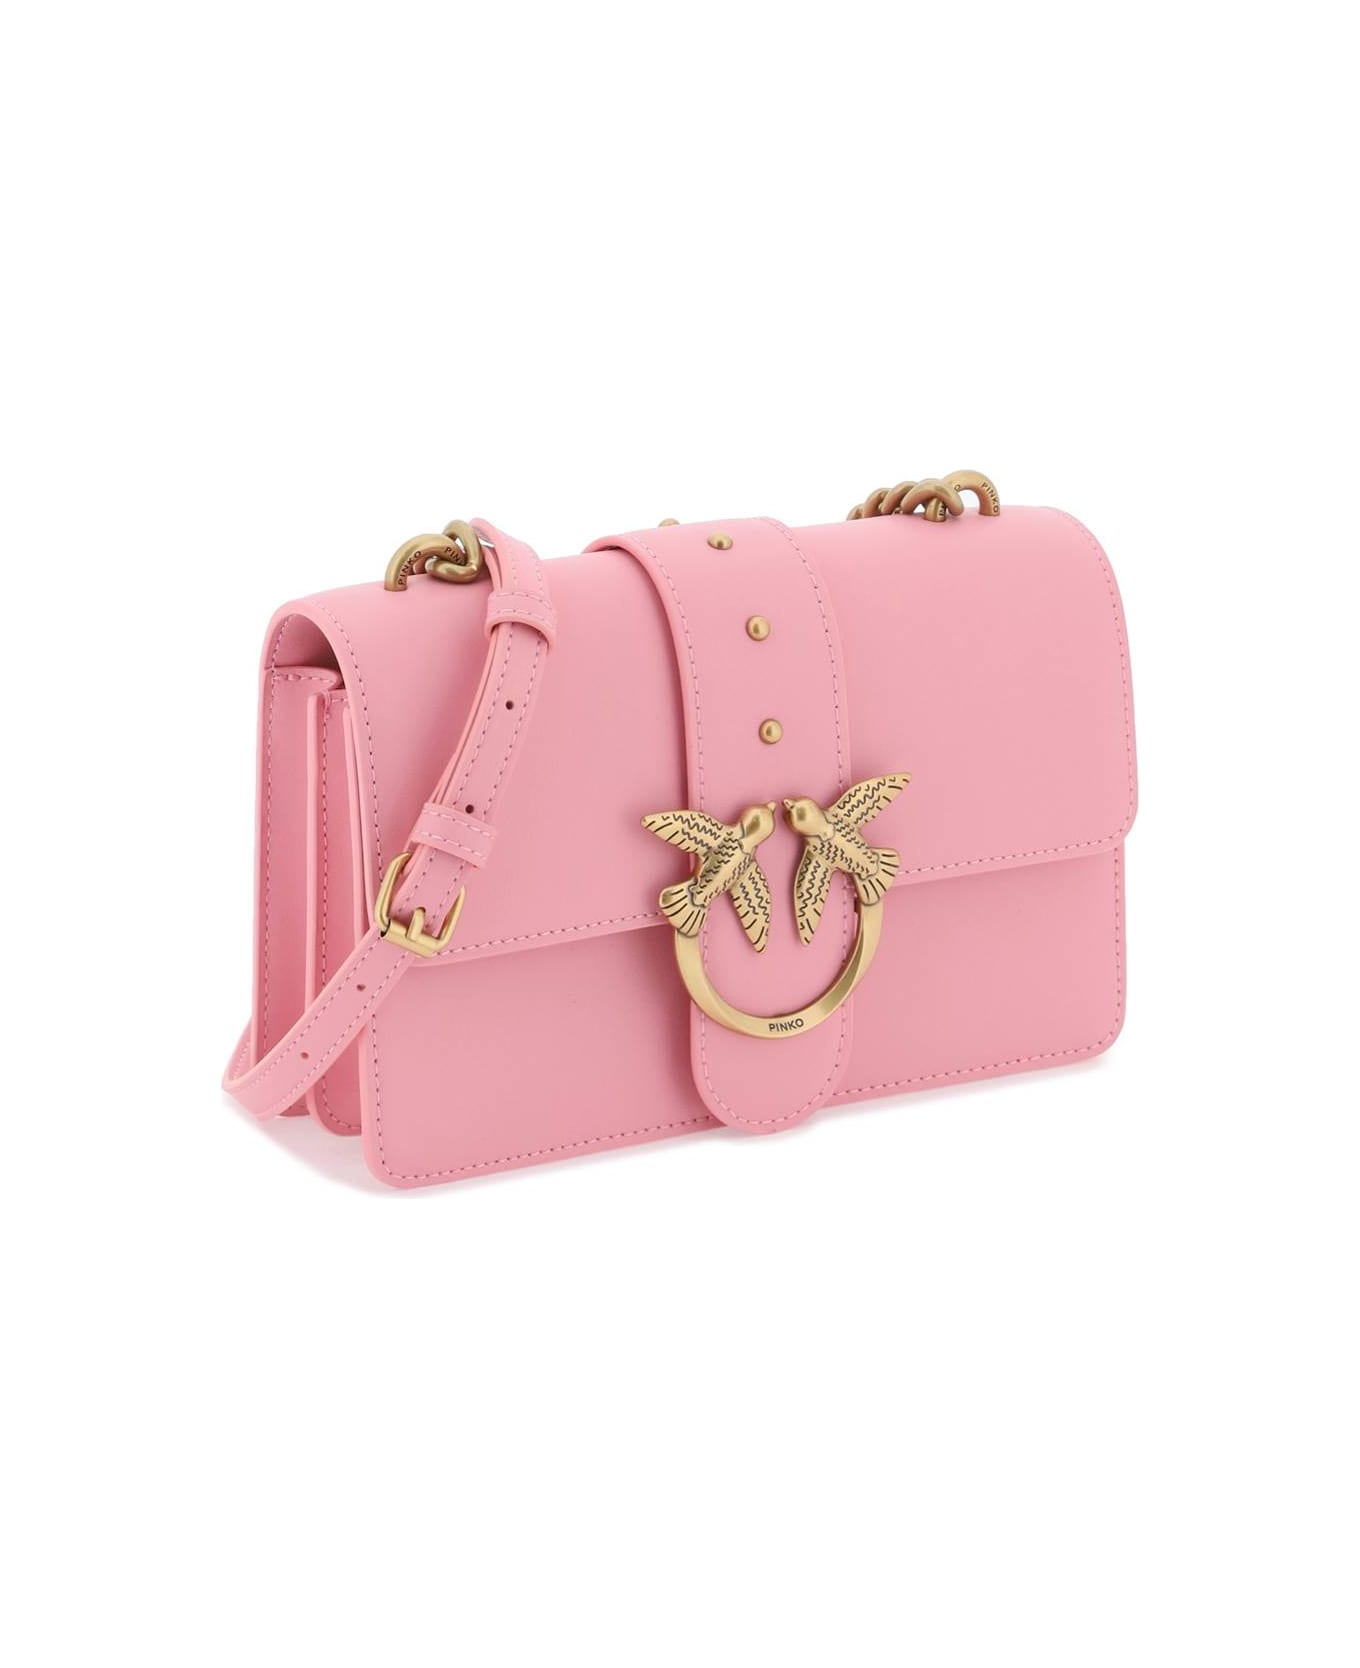 Pinko Mini Love Bag One Simply Shoulder Bag - ROSA MARINO ANTIQUE GOLD (Pink) ショルダーバッグ